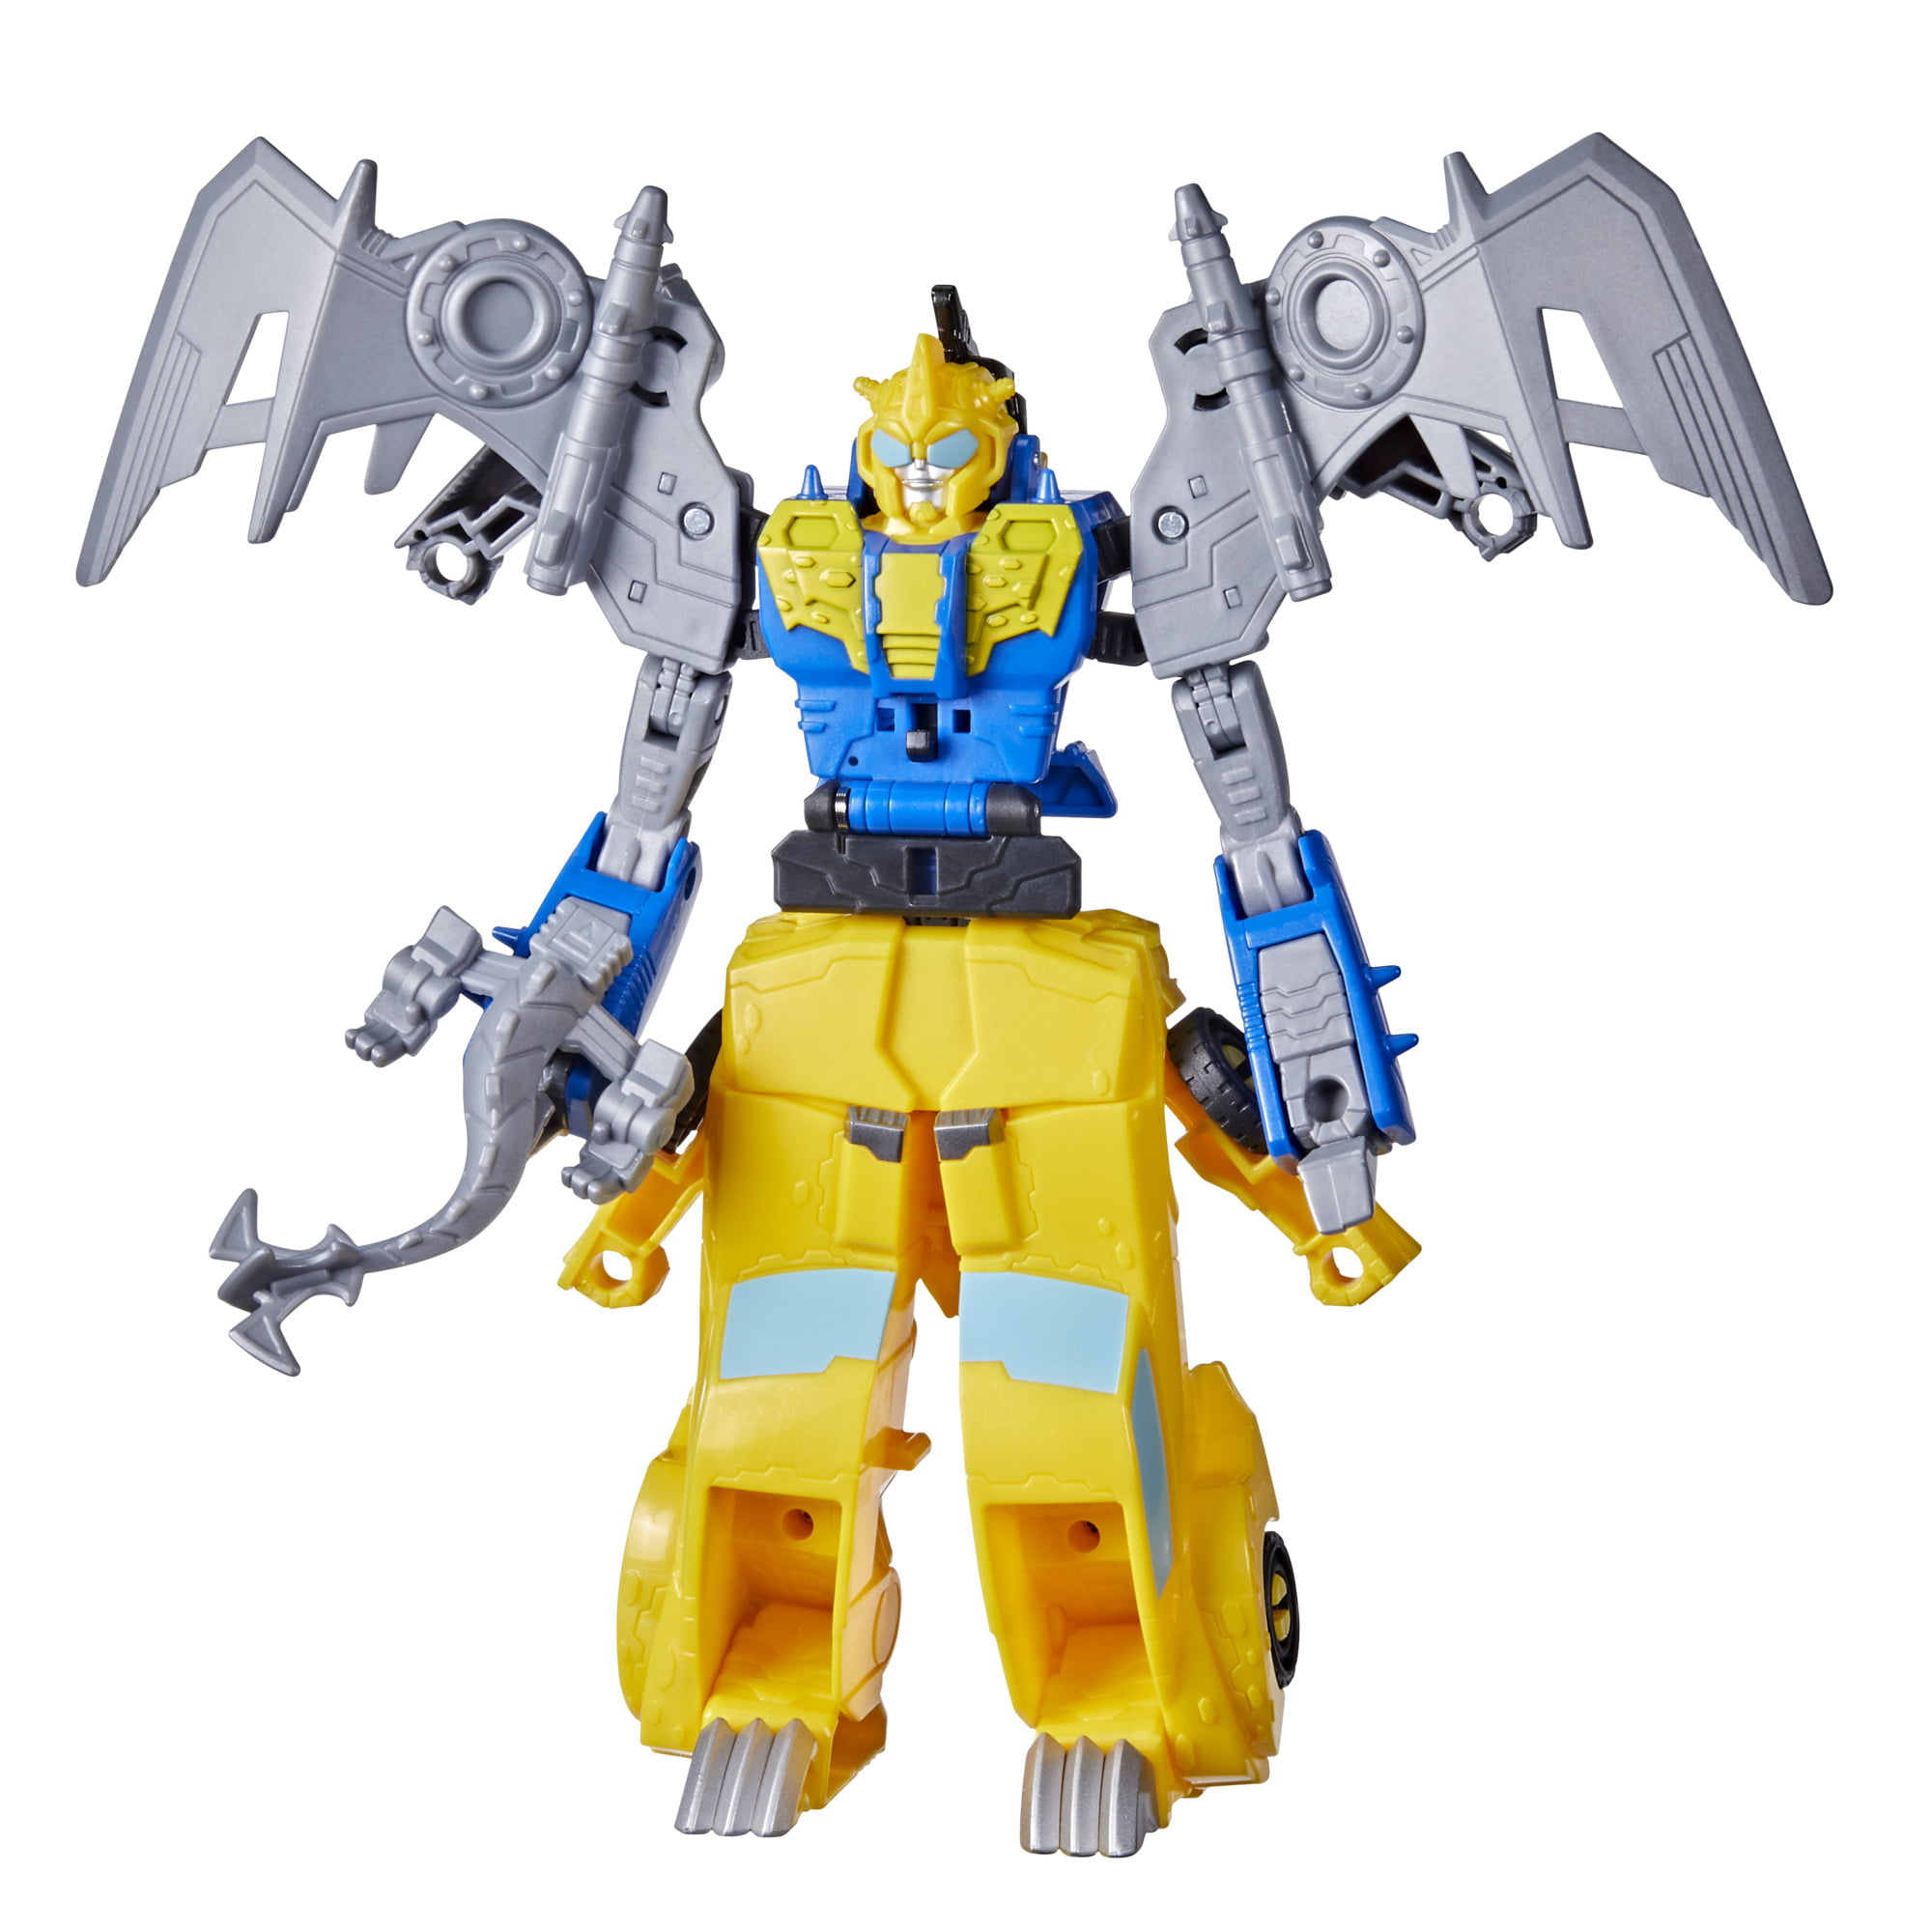 NEU Transformers Dark of The Moon Shockwave Robot Action Figure Spielzeug TOYS 